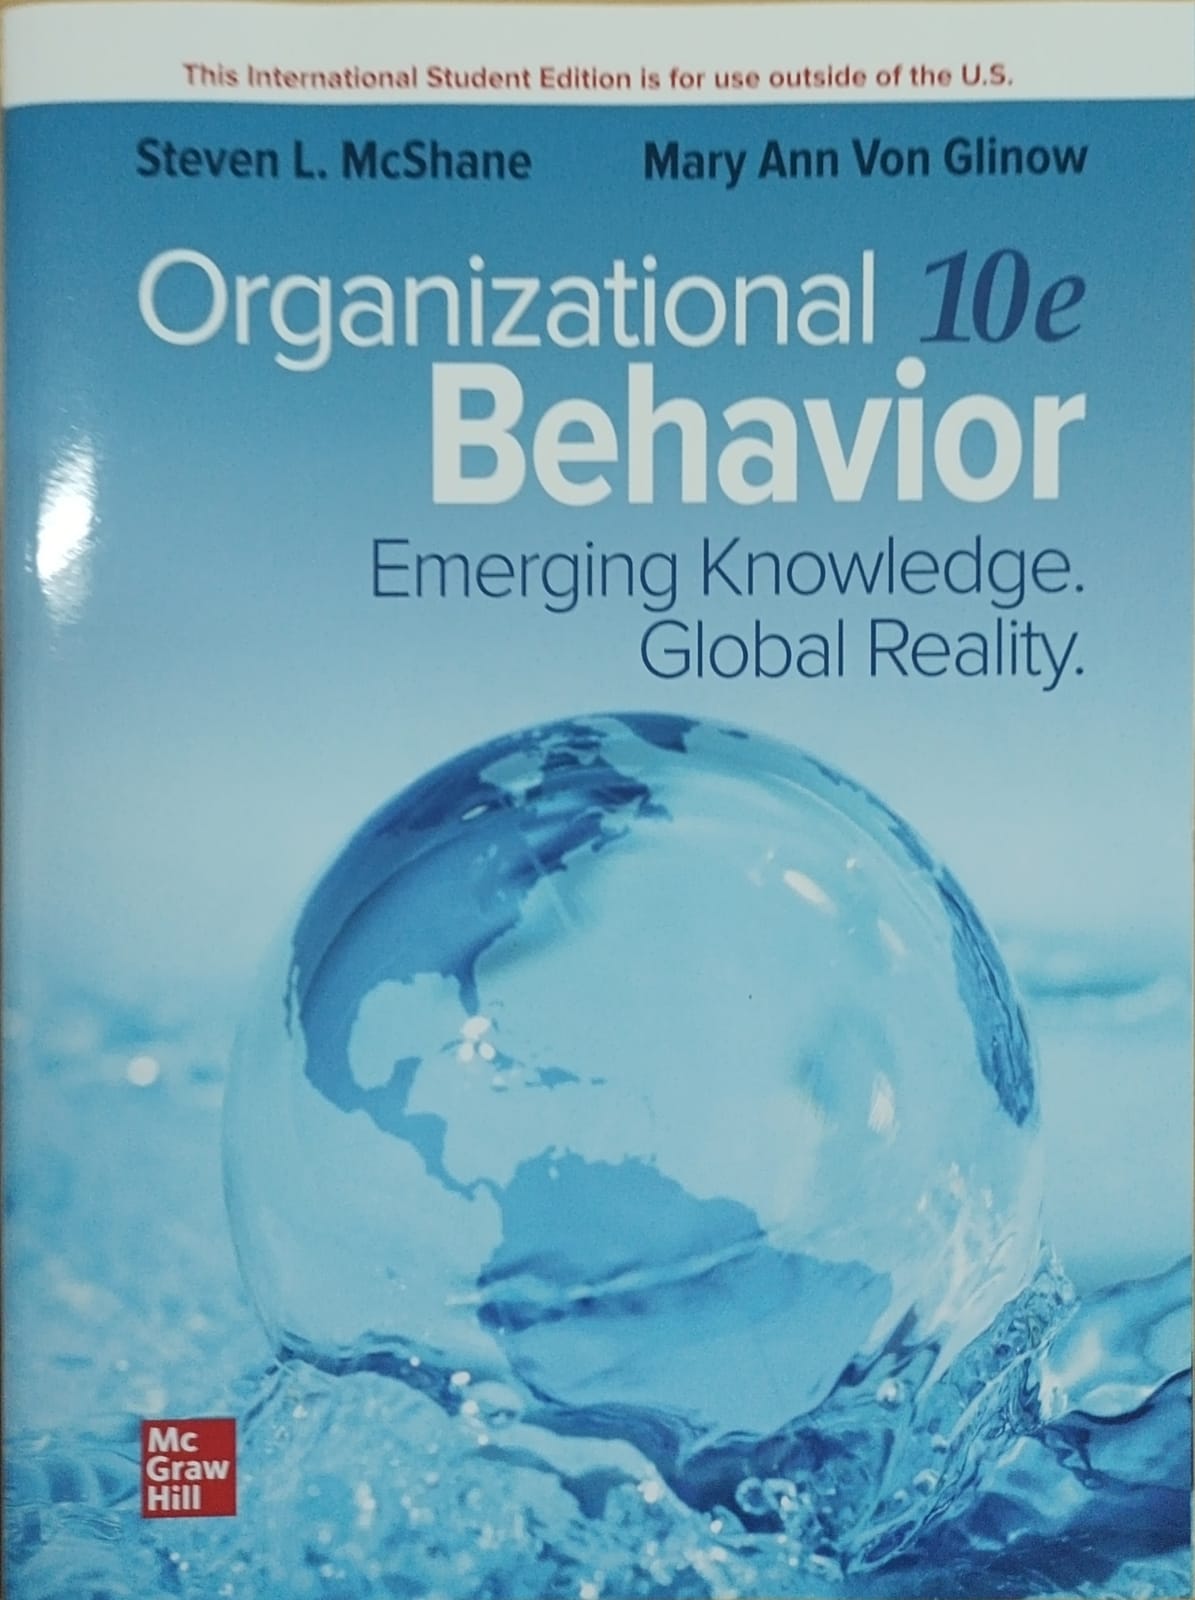 Organizational behavior: emerging knowledge, global reality 10th edition